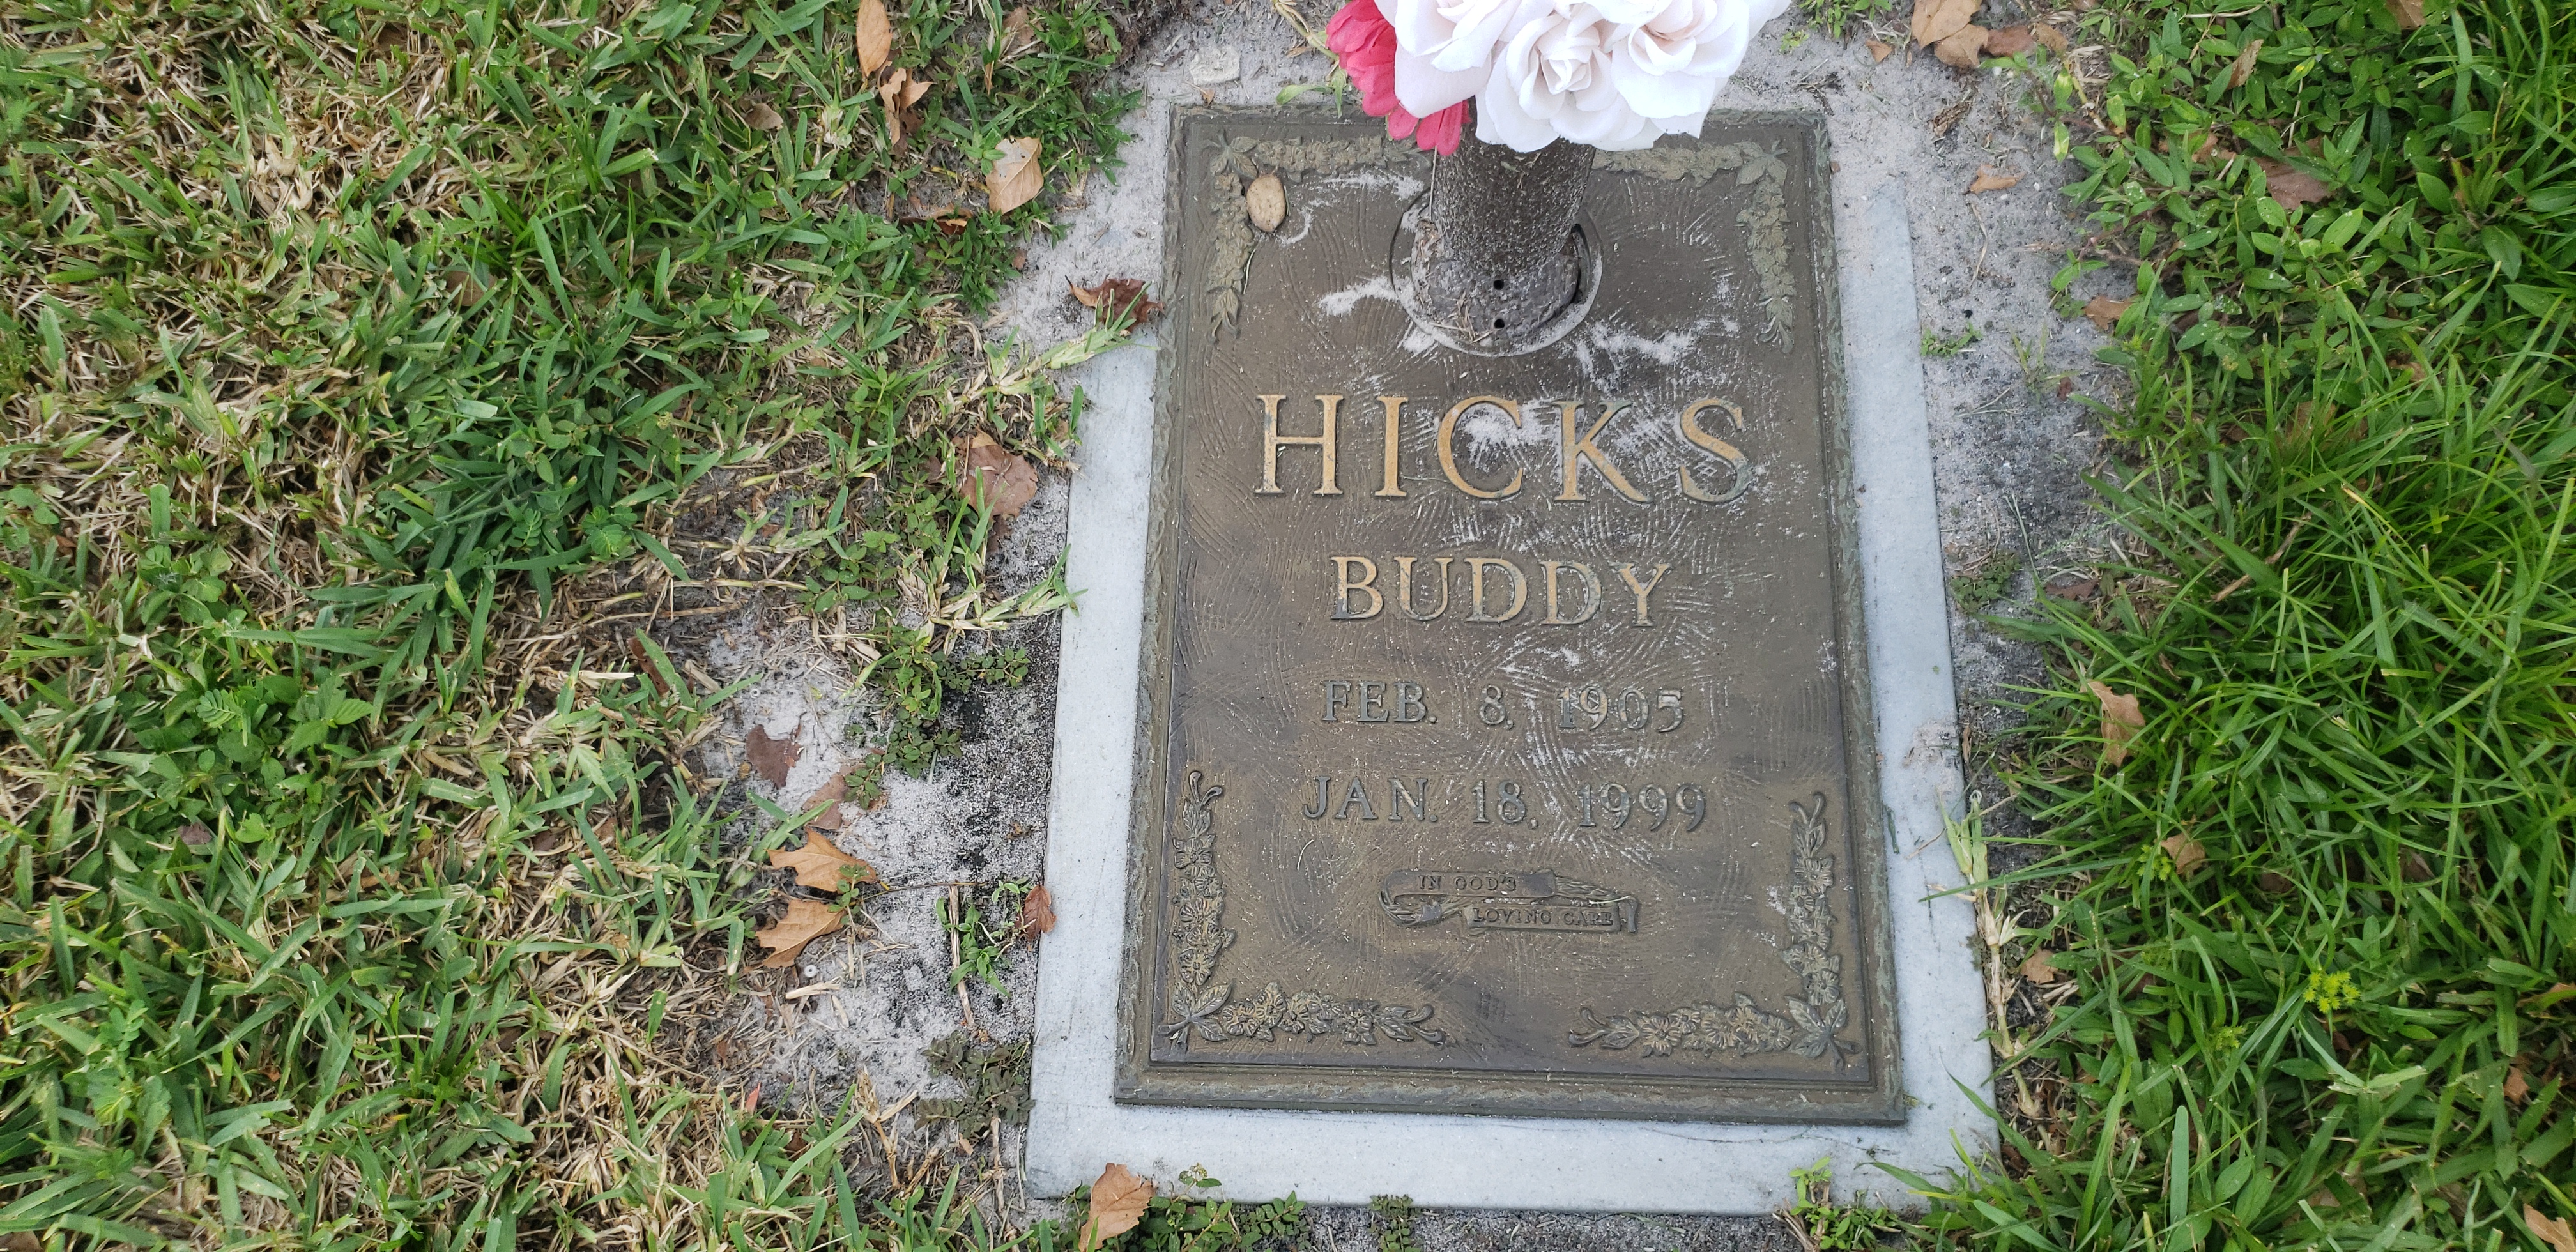 Buddy Hicks